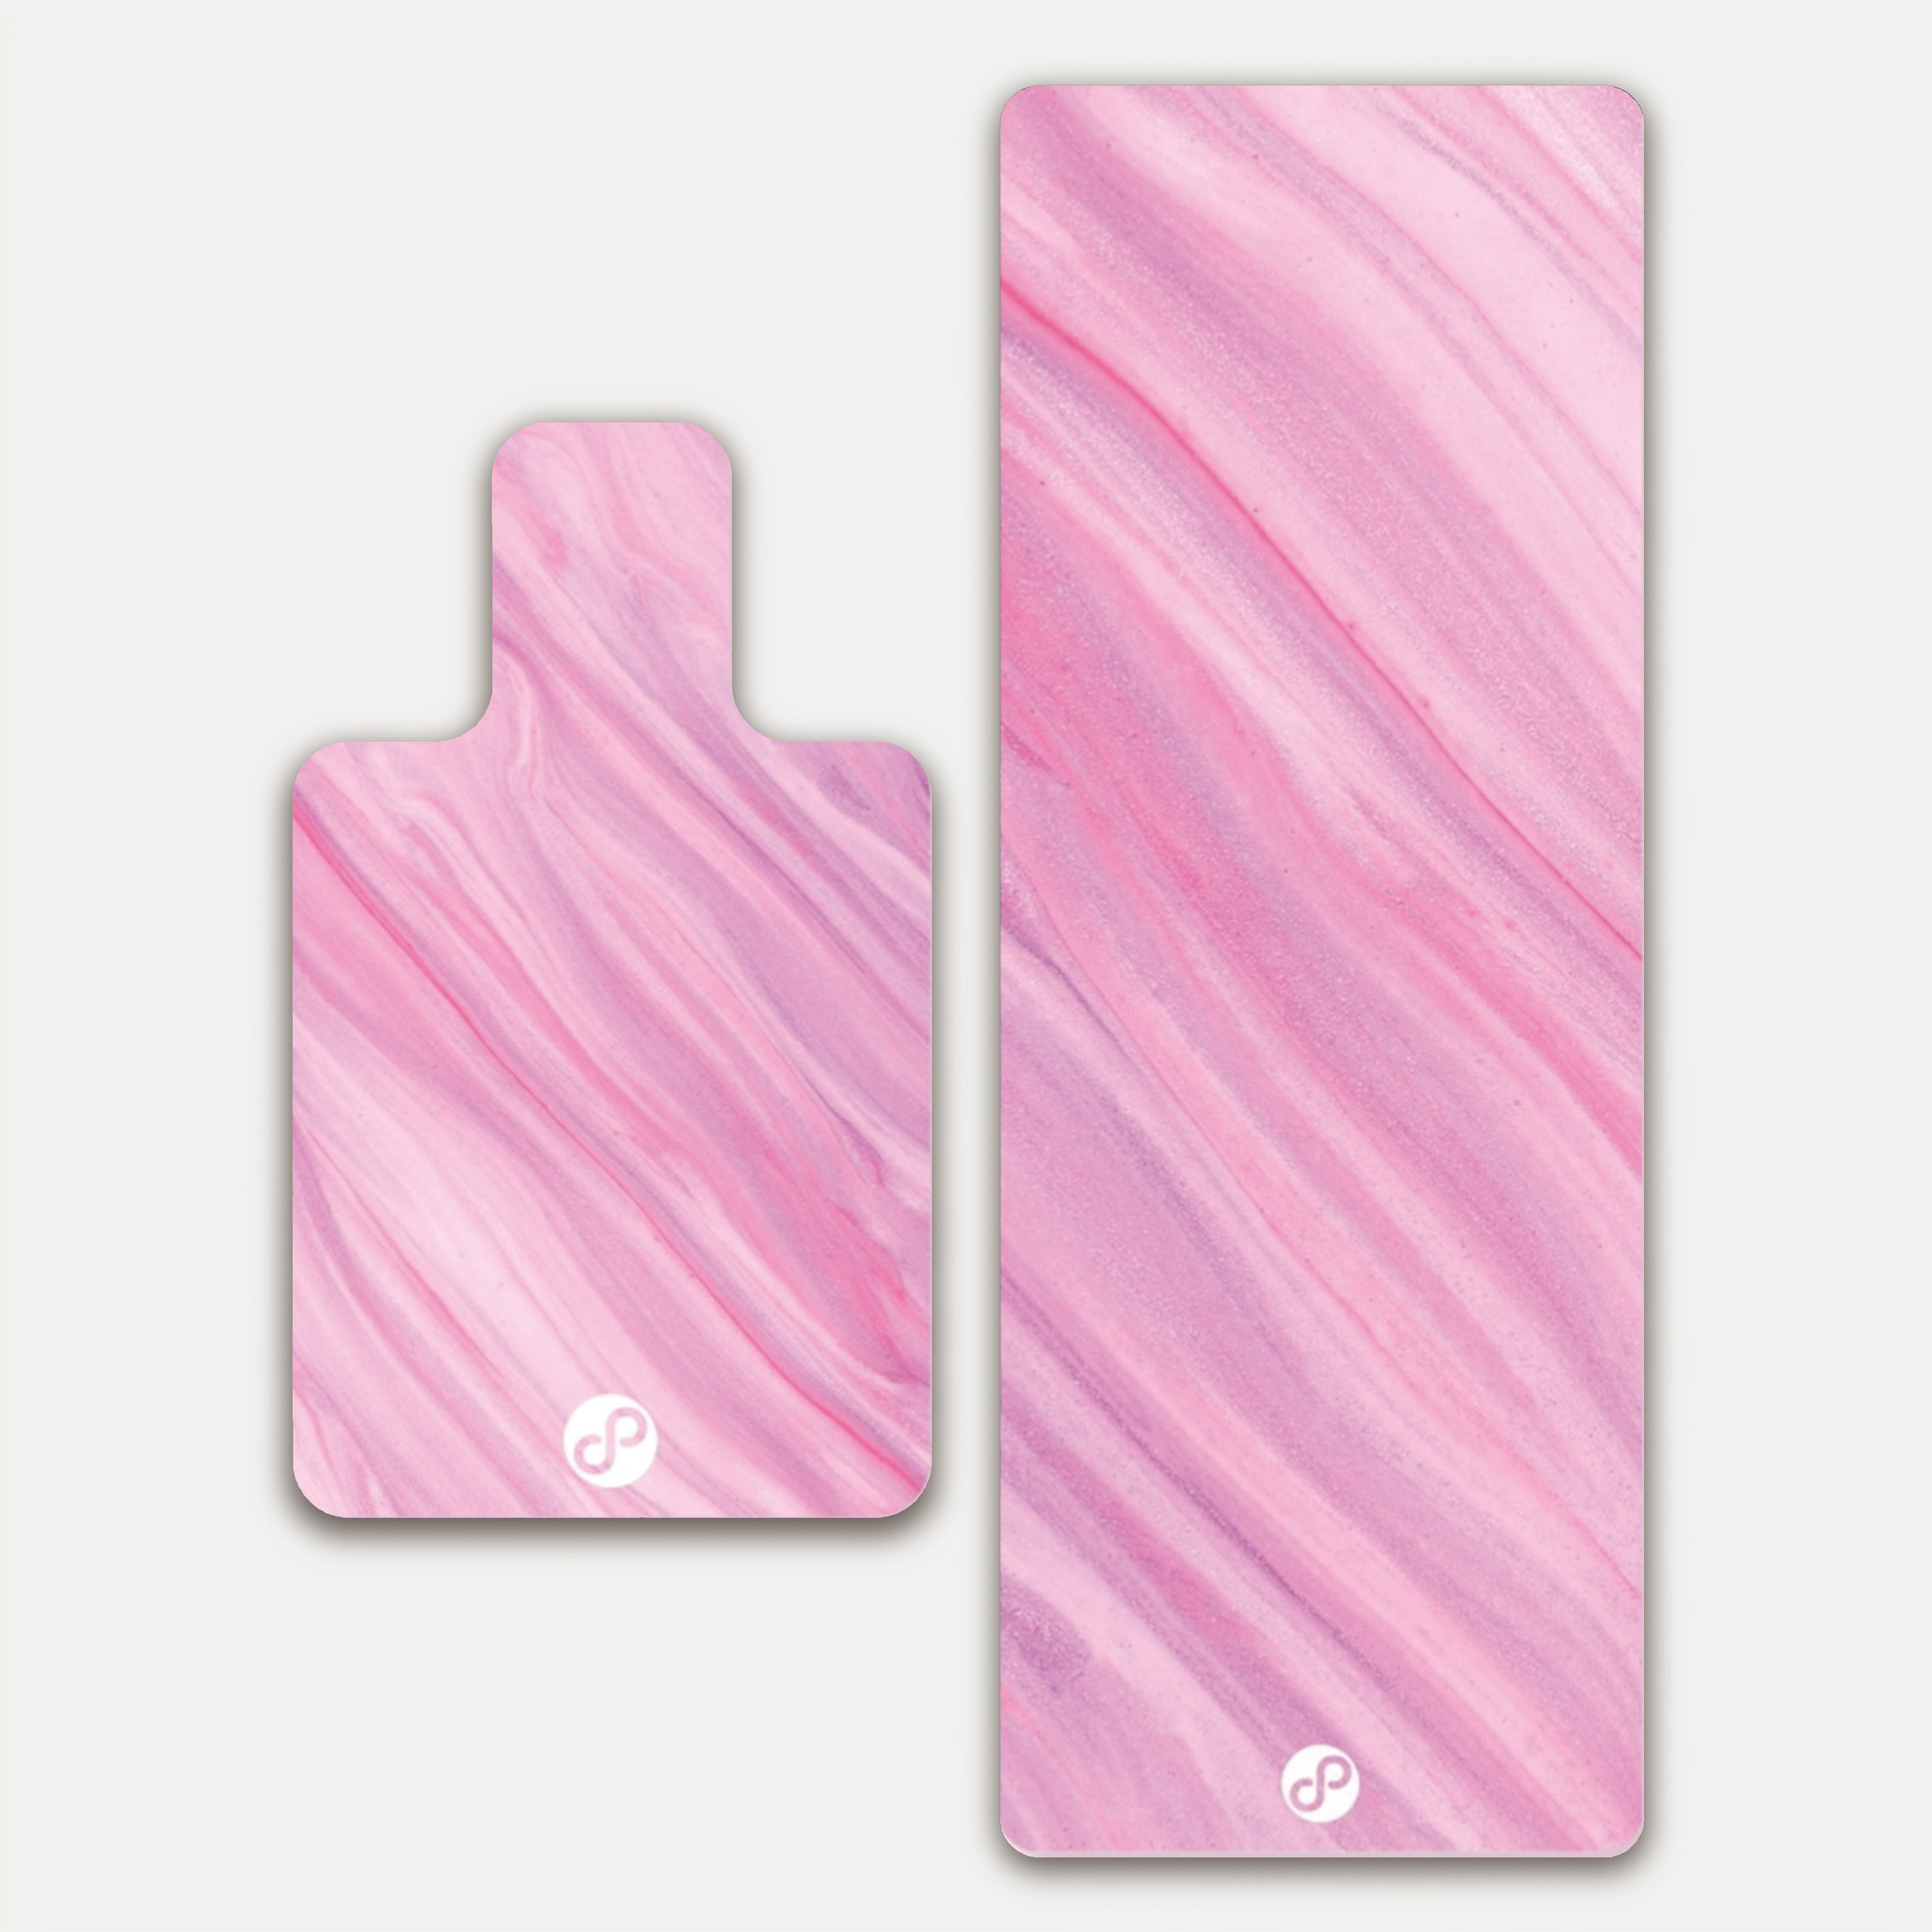 REFORMERMAT Micro-fibre Durable Reformer Pilates Yoga Mat - Pink Strawberry Milk Stripe Design